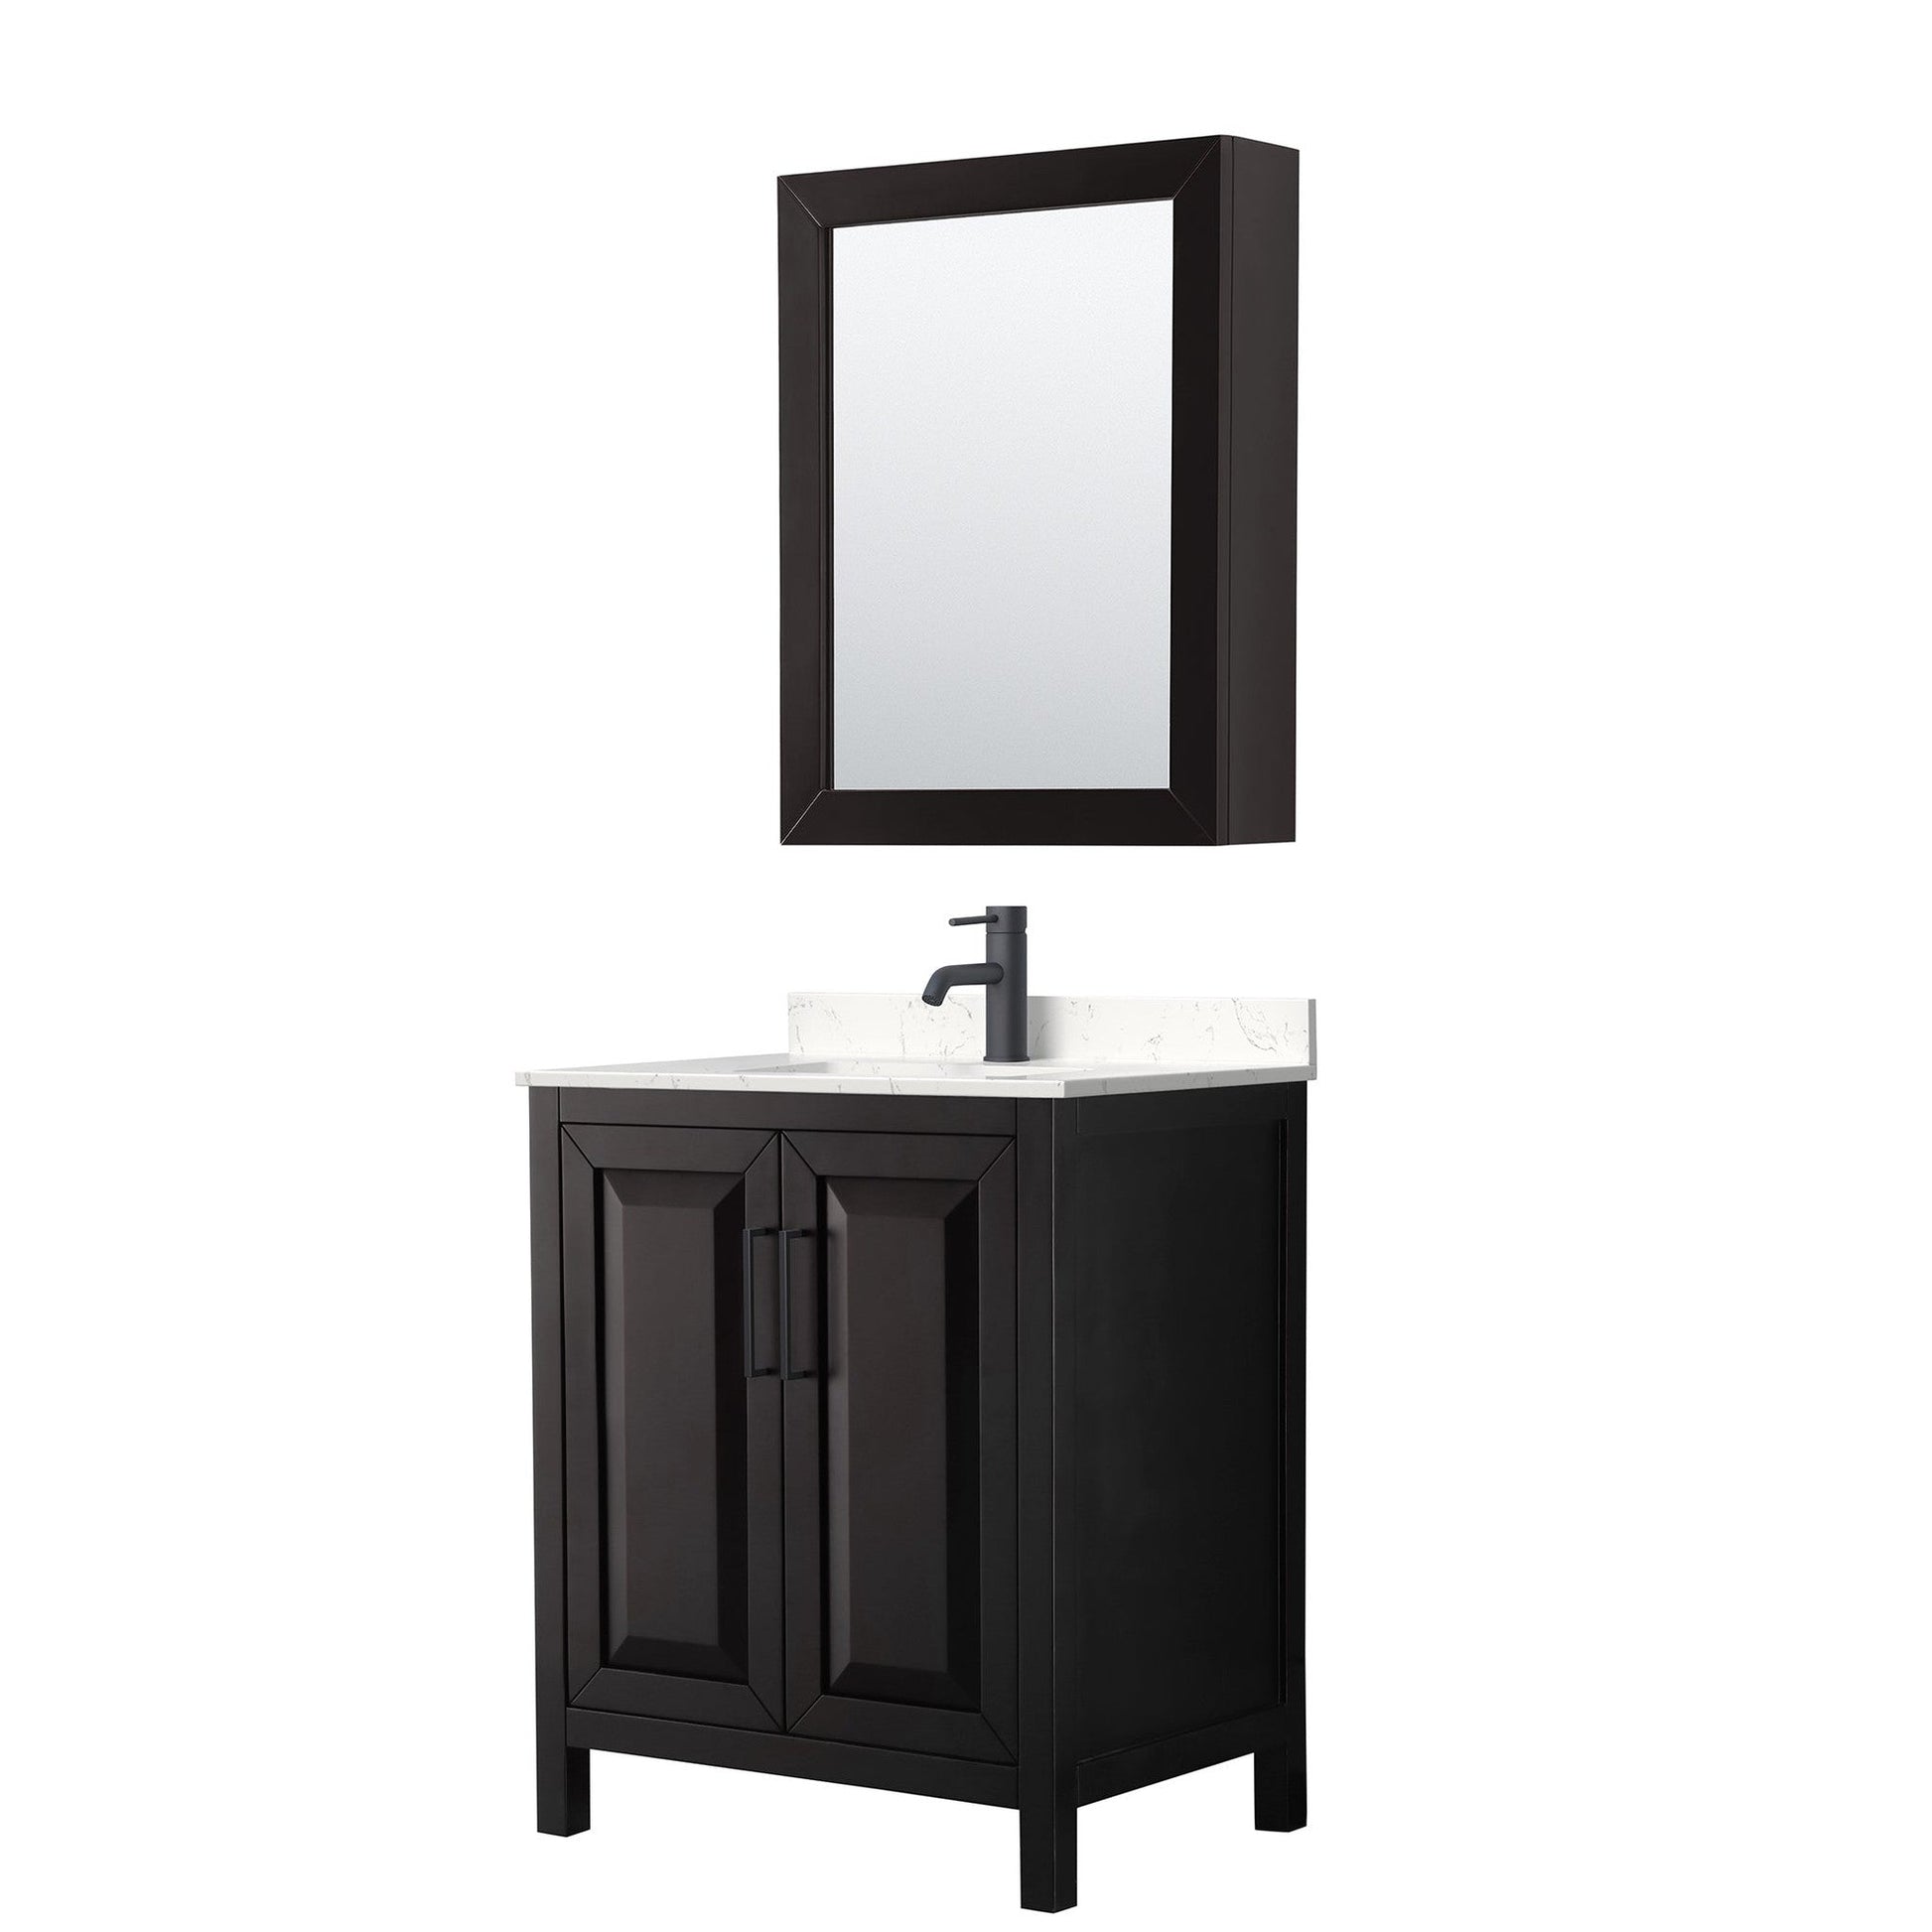 Daria 30" Single Bathroom Vanity in Dark Espresso, Carrara Cultured Marble Countertop, Undermount Square Sink, Matte Black Trim, Medicine Cabinet